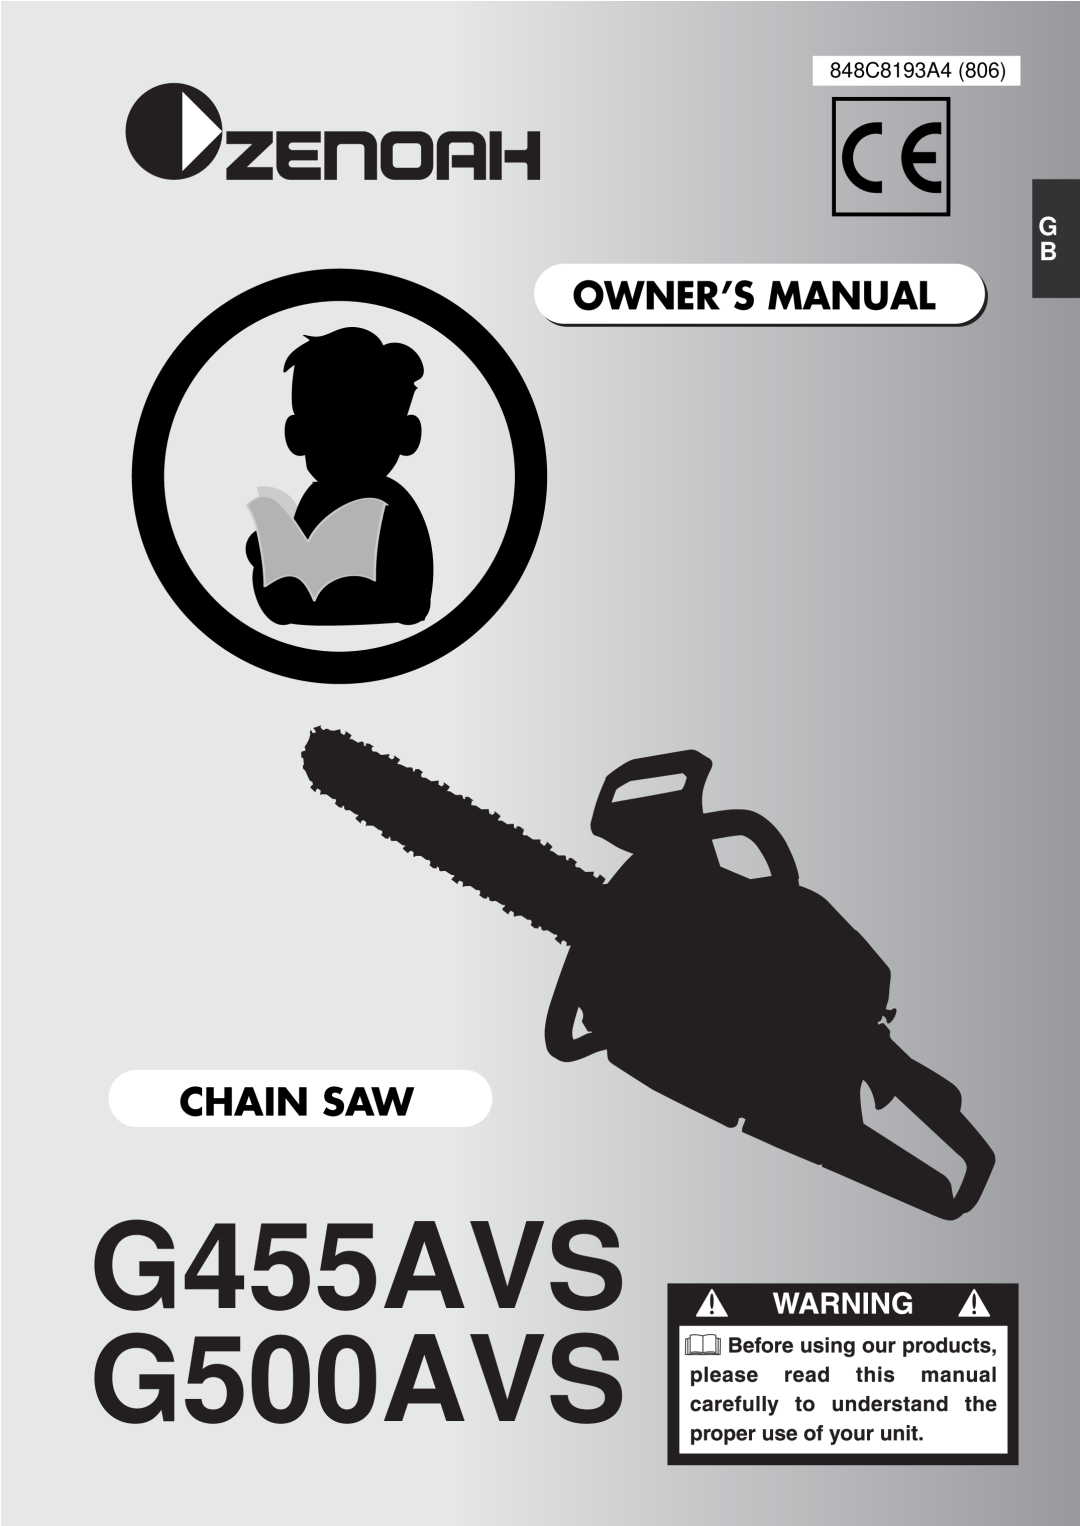 Zenoah owner manual G455AVS G500AVS, Chain Saw, 848C8193A4 